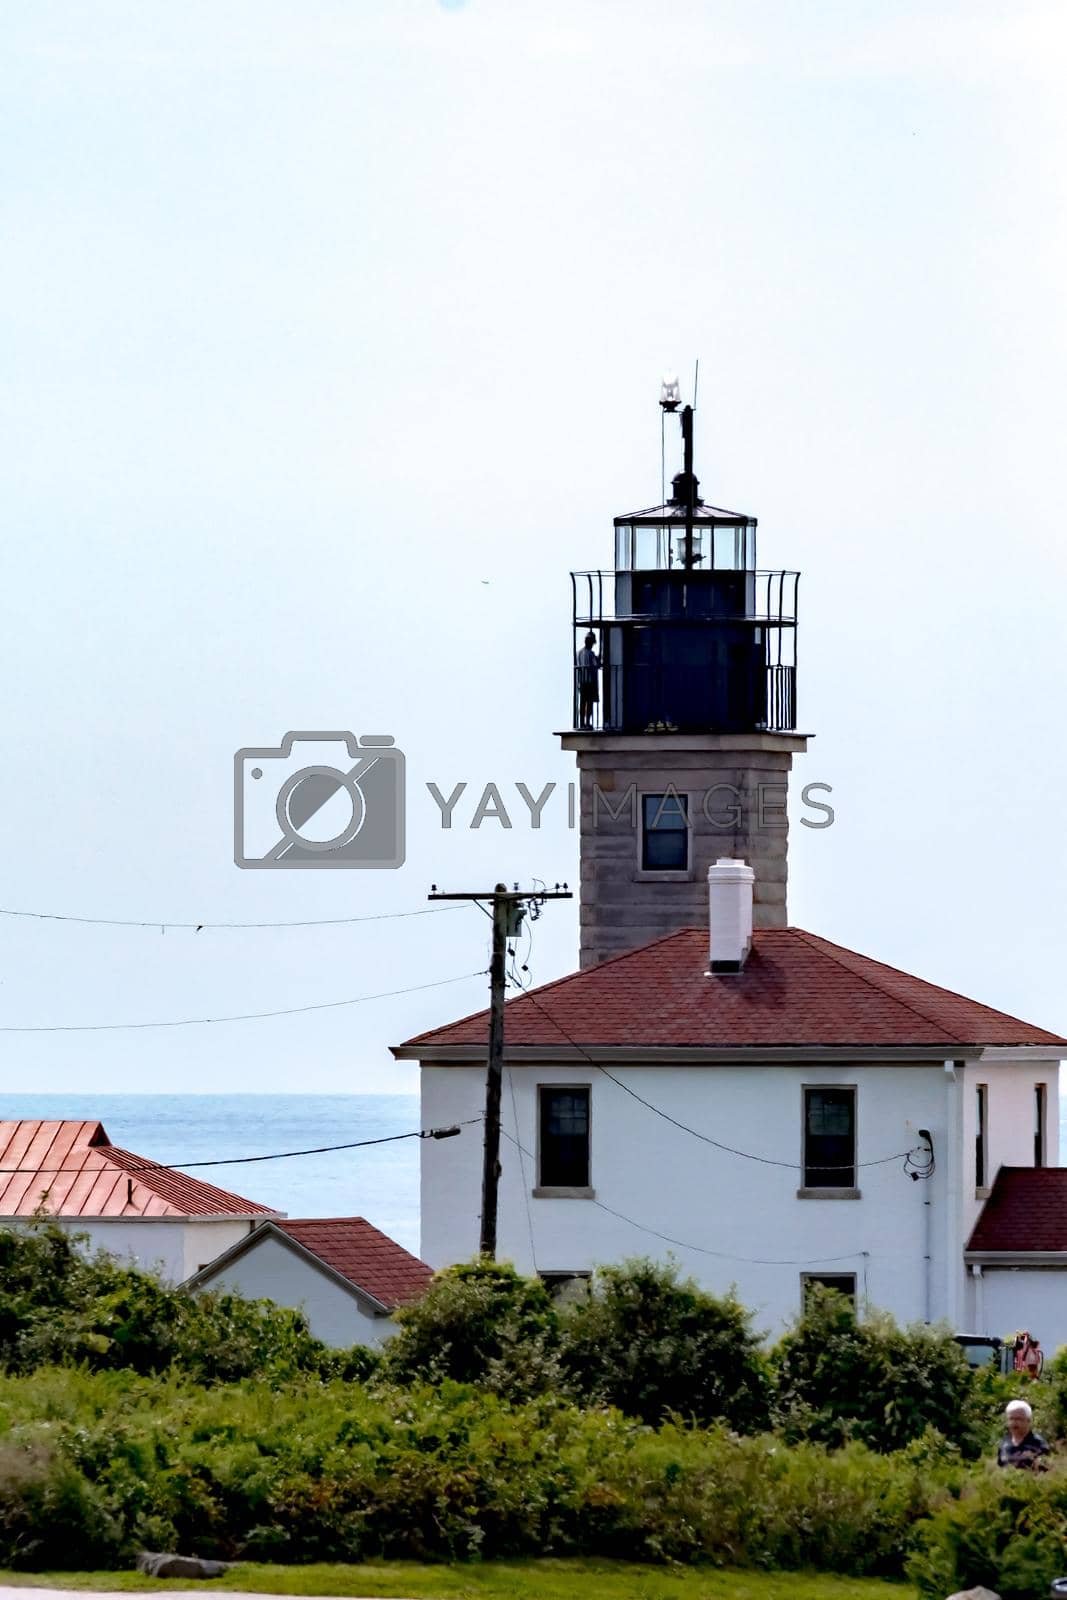 Royalty free image of Beavertail Lighthouse Conacicut Island Jamestown, Rhode Island by digidreamgrafix